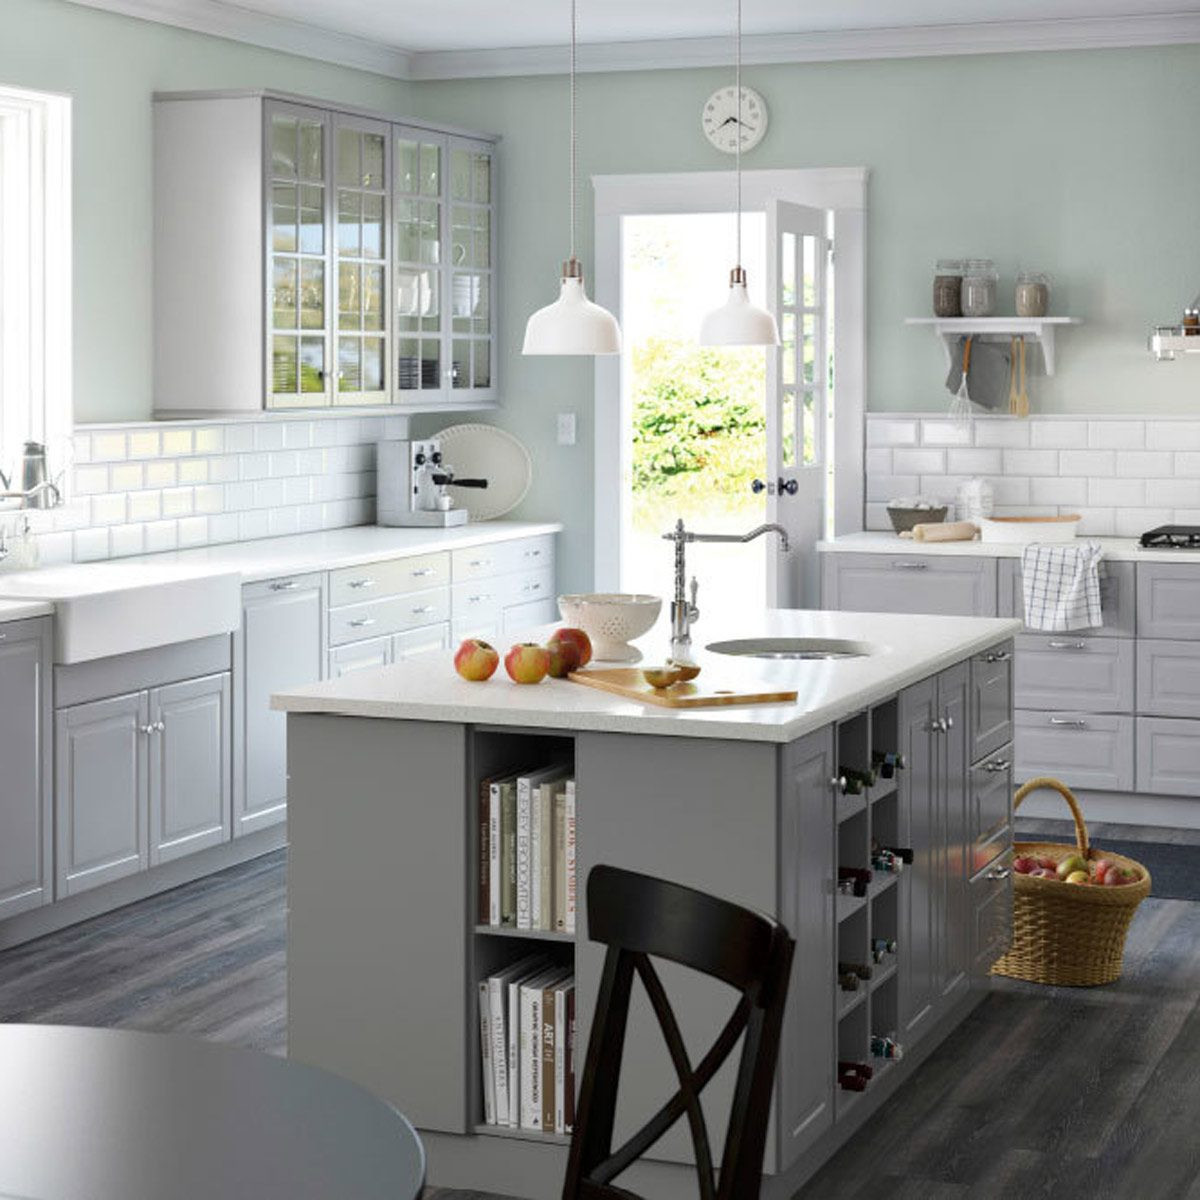 Small Kitchen Island With Sink
 12 Inspiring Kitchen Island Ideas — The Family Handyman